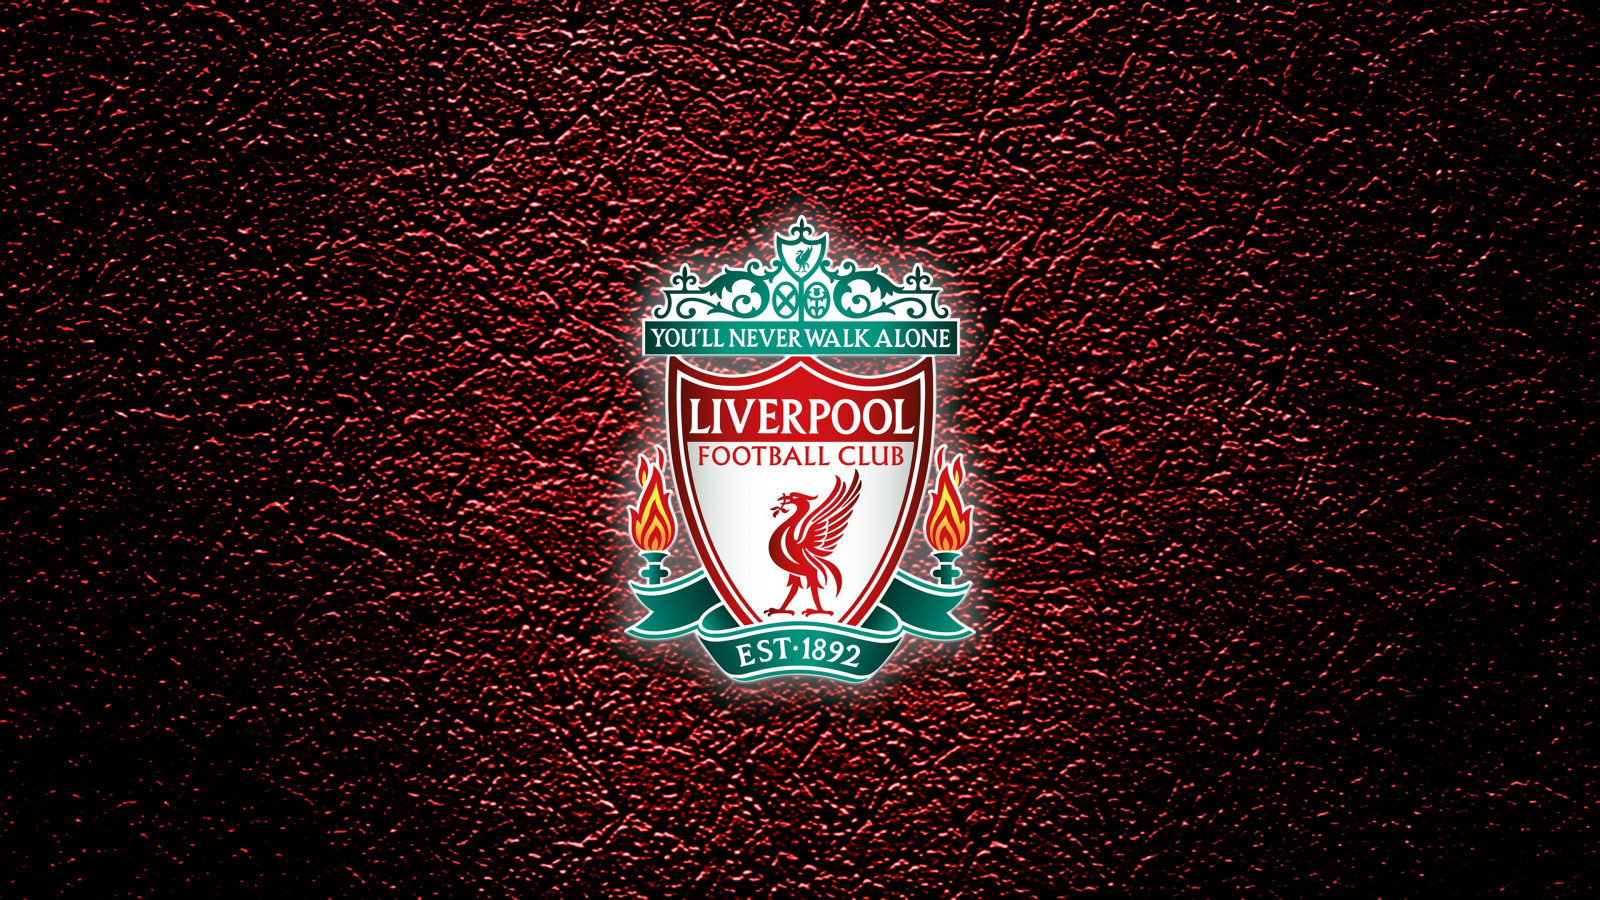 Liverpool - You'll never walk alone wallpaper 1600x900